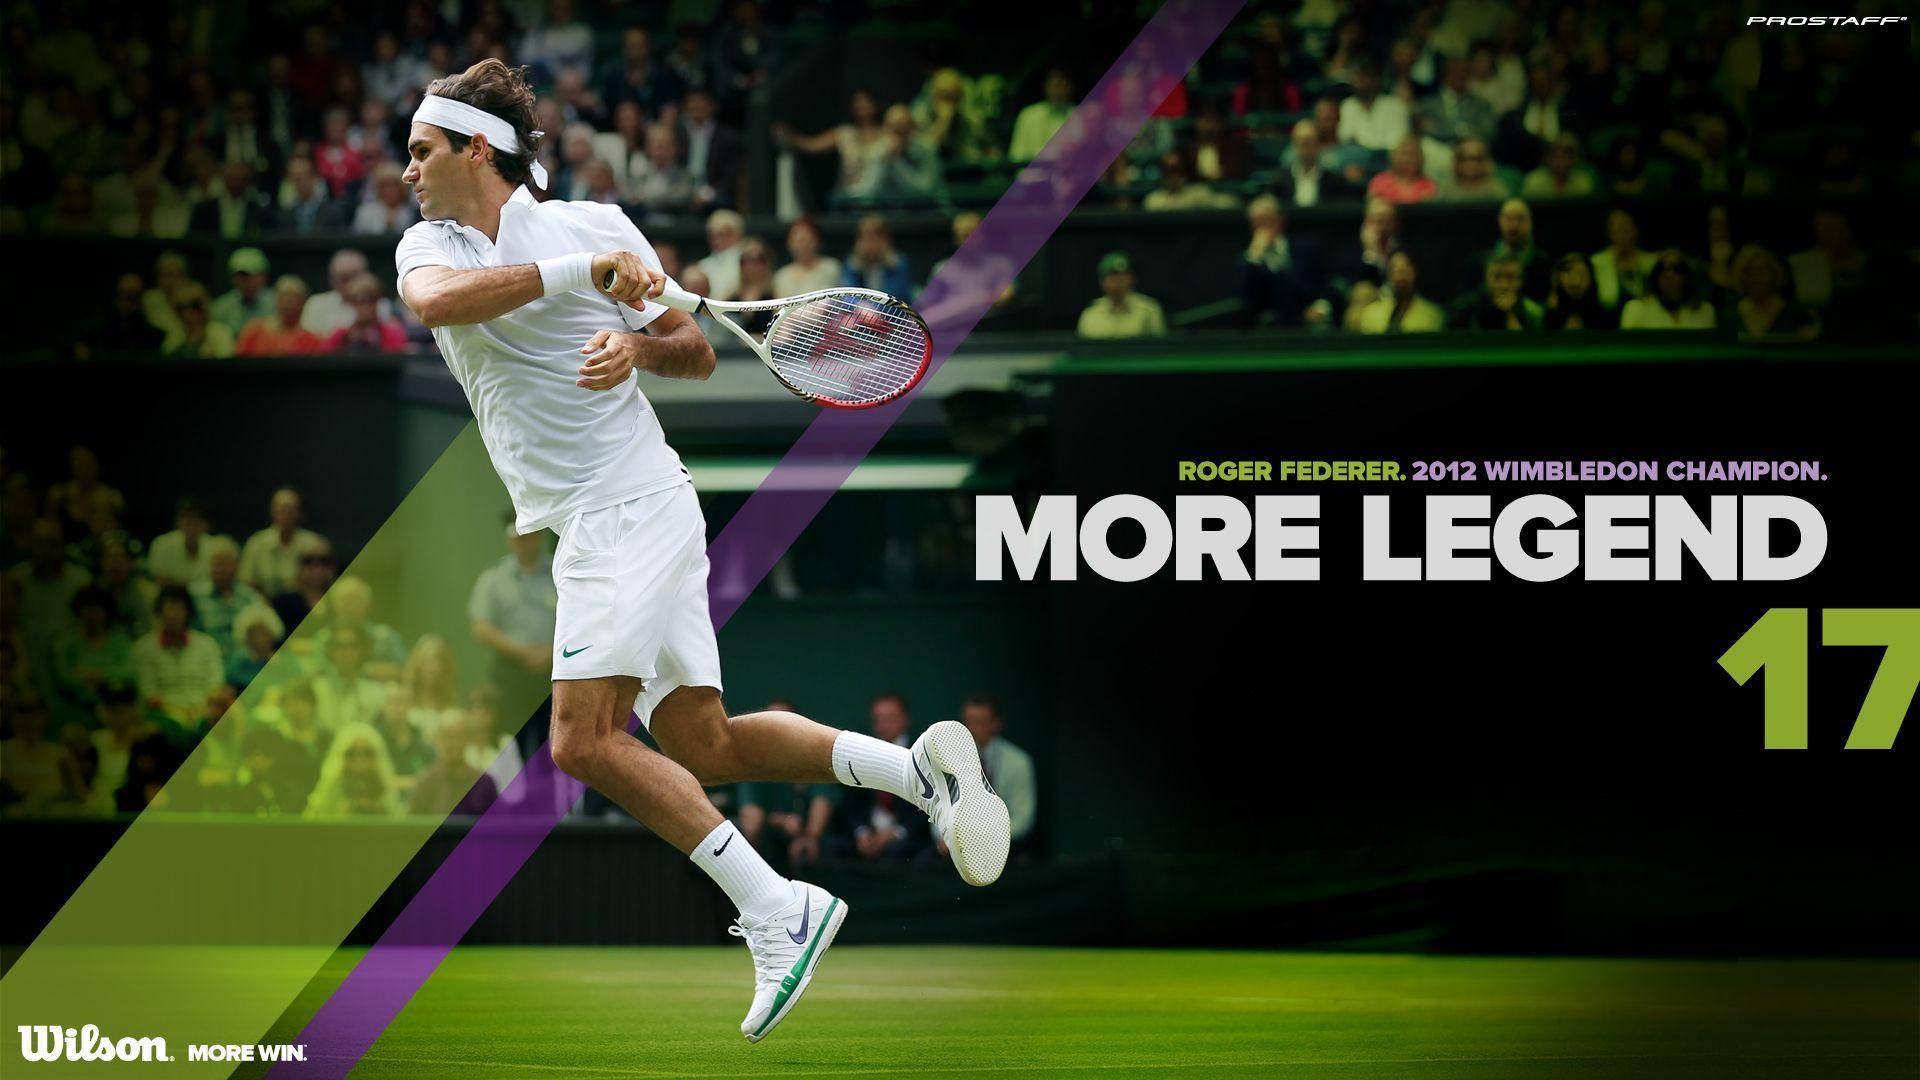 Wimbledon Champion Roger Federer Poster Background